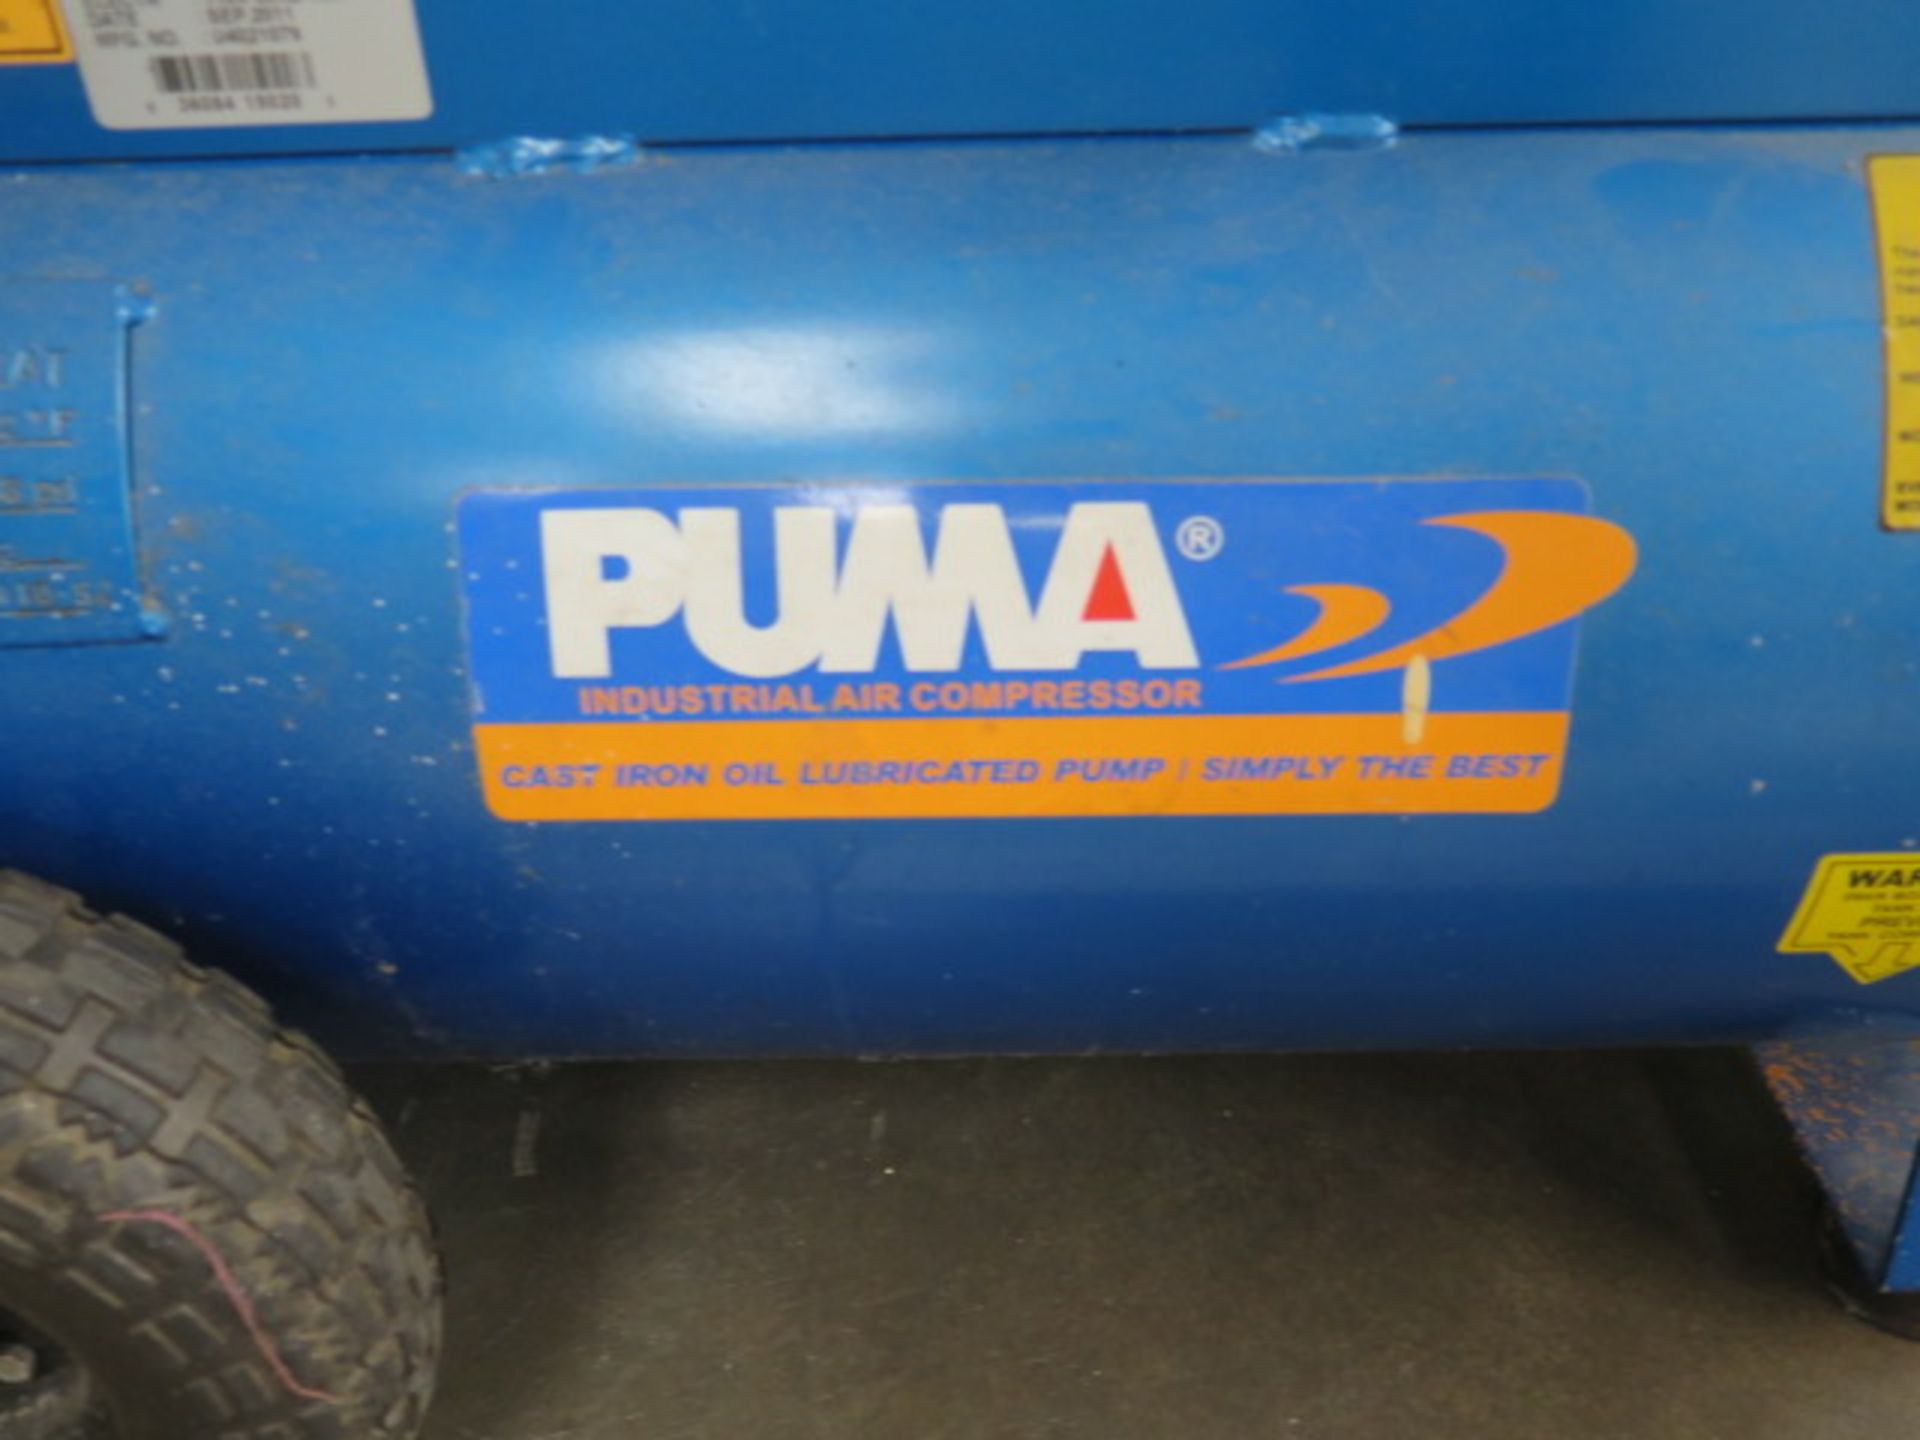 Puma 2Hp Portable Air Compressor w/ 2-Stage Pump, 20 Gallon Tank (SOLD AS-IS - NO WARRANTY) - Image 5 of 7